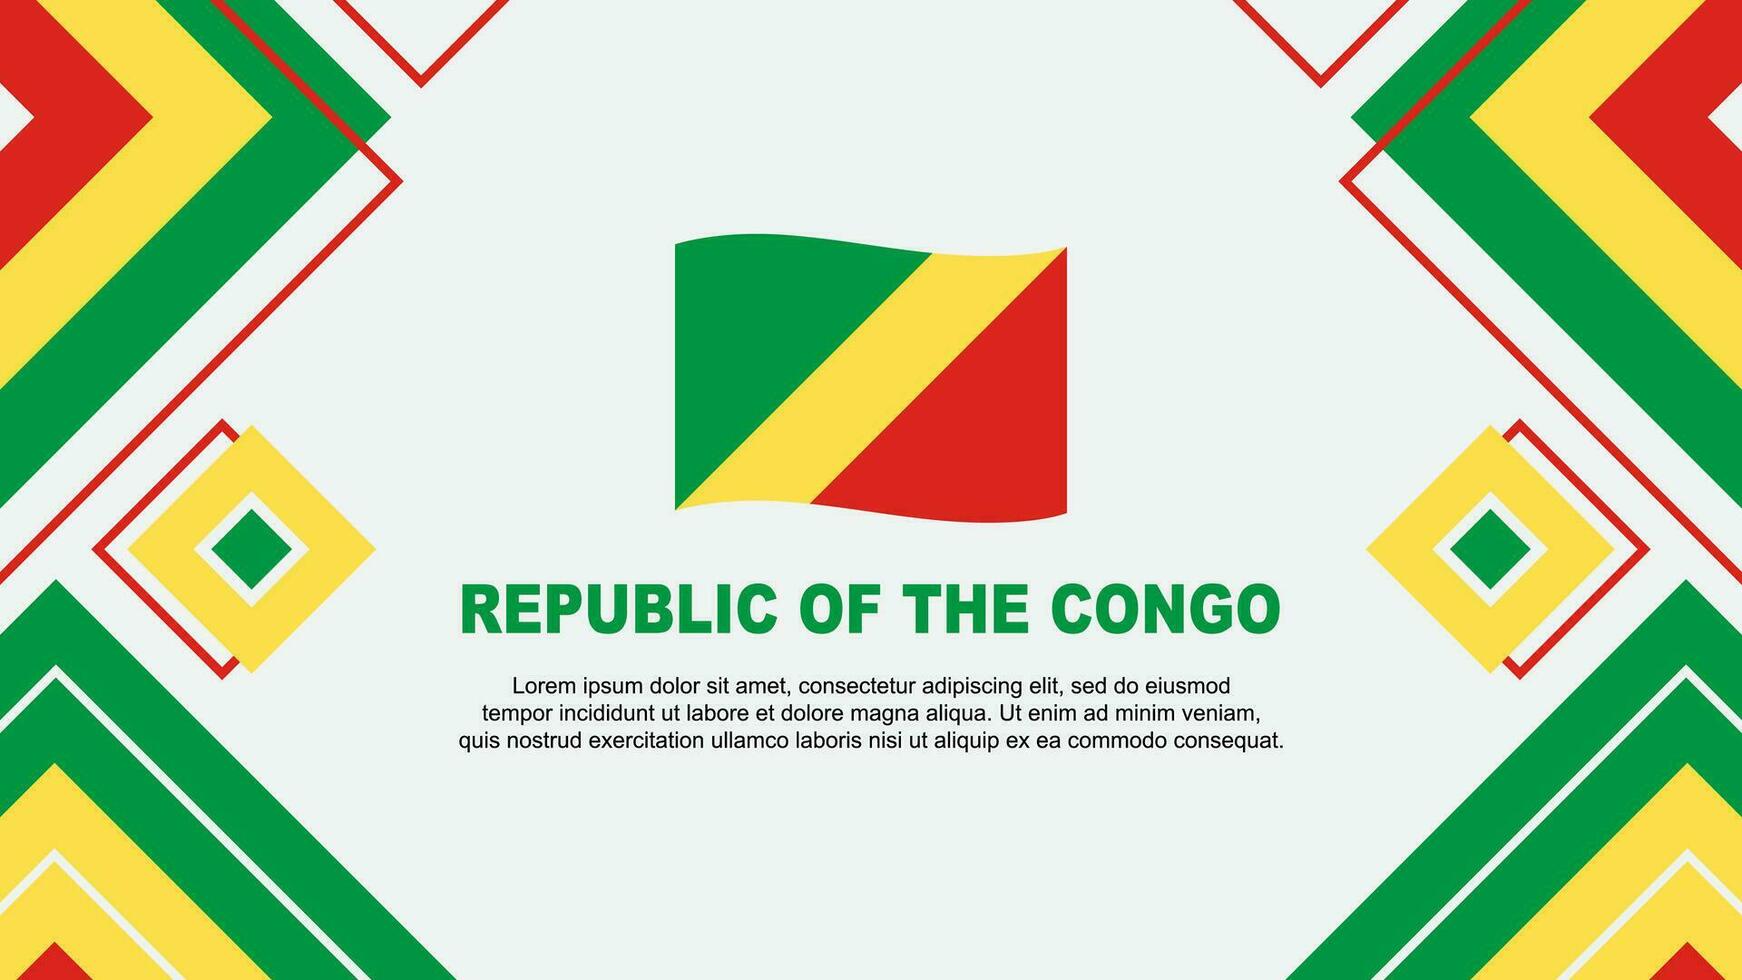 republiek van de Congo vlag abstract achtergrond ontwerp sjabloon. republiek van de Congo onafhankelijkheid dag banier behang vector illustratie. republiek van de Congo achtergrond